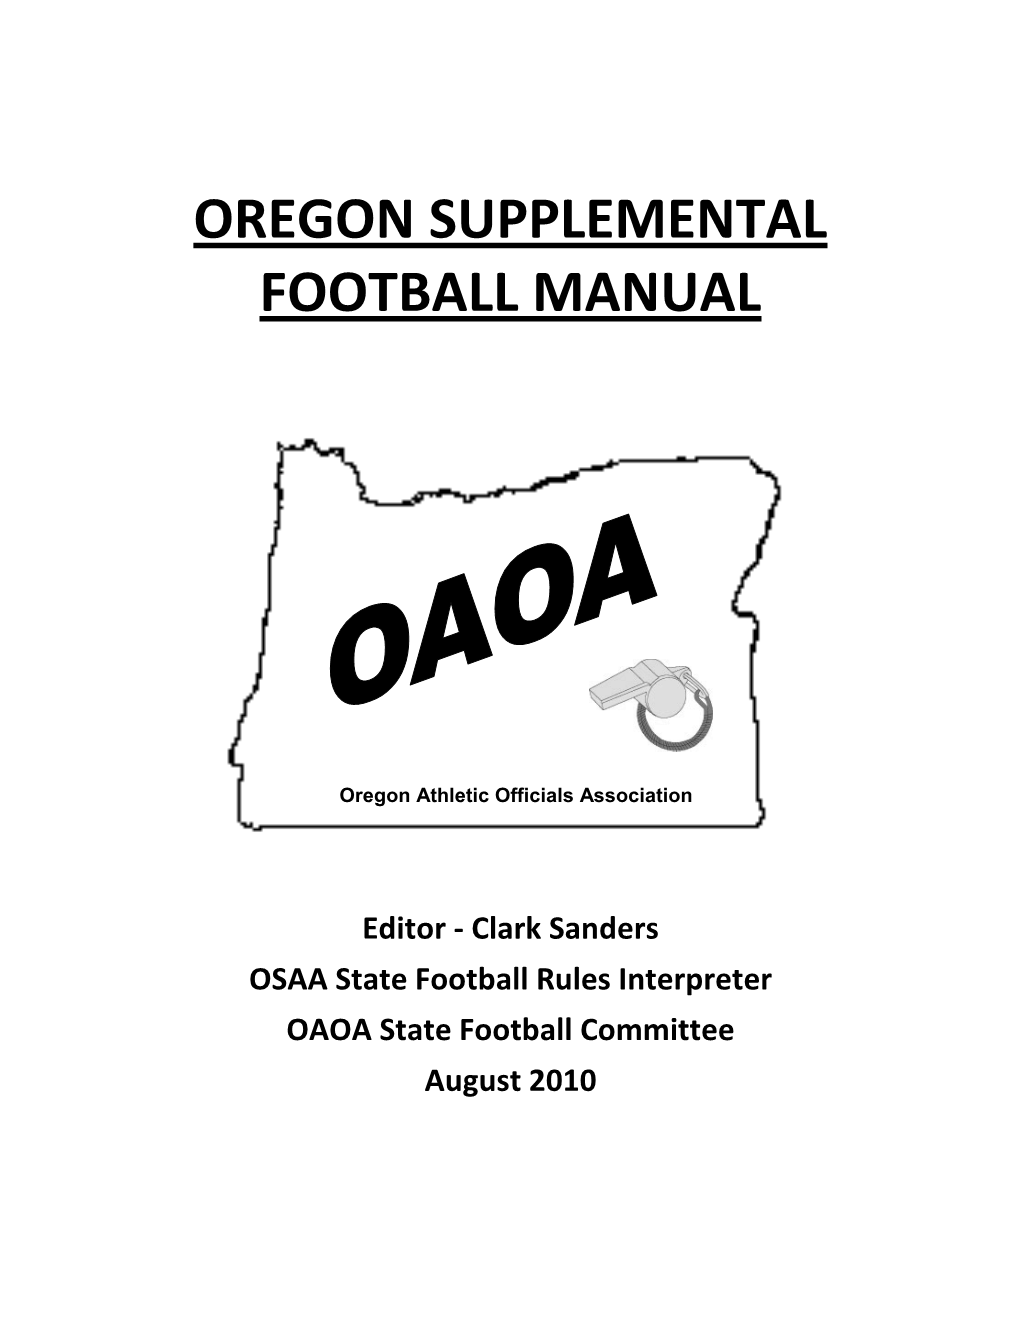 Oregon Supplemental Football Manual